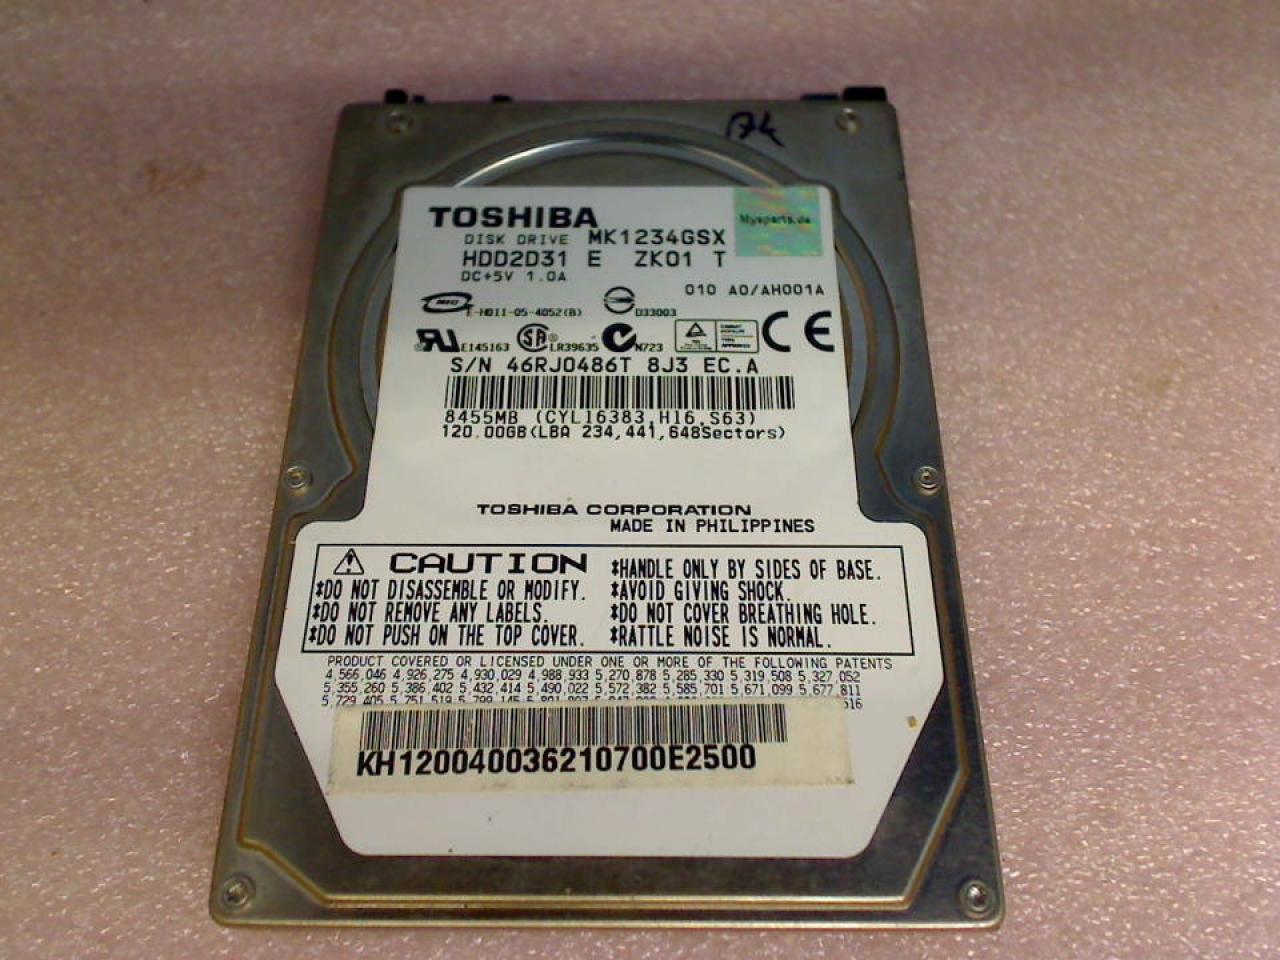 HDD Festplatte 2,5" 120GB Toshiba HDD2D31 E ZK01 T SATA Targa Traveller 1524 X2